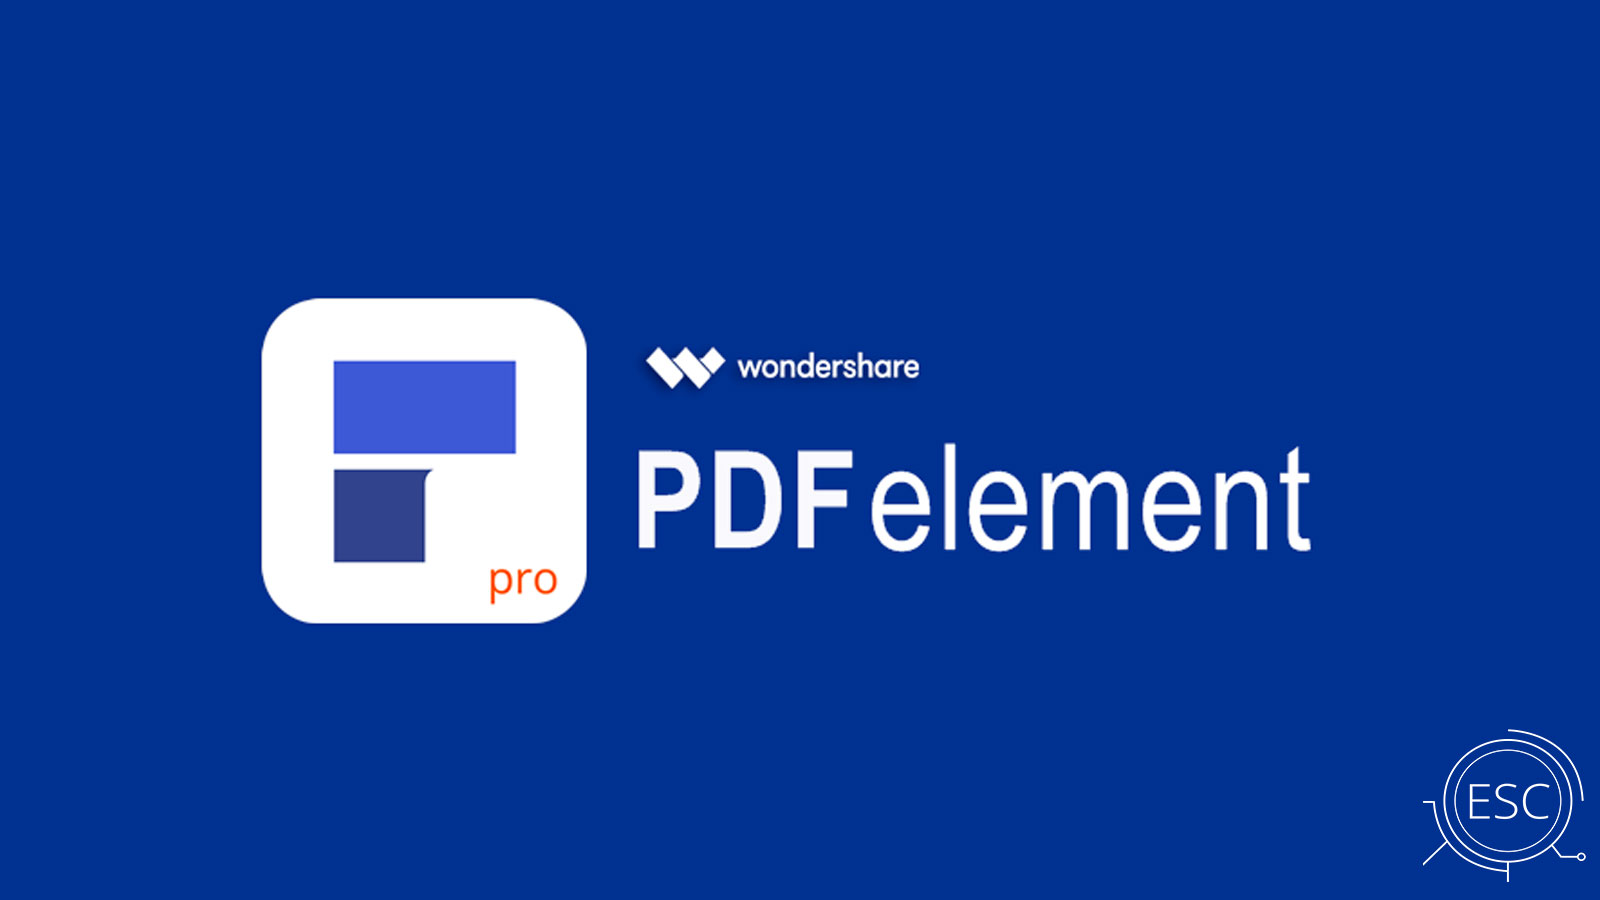 pdfelement 6 pro full download